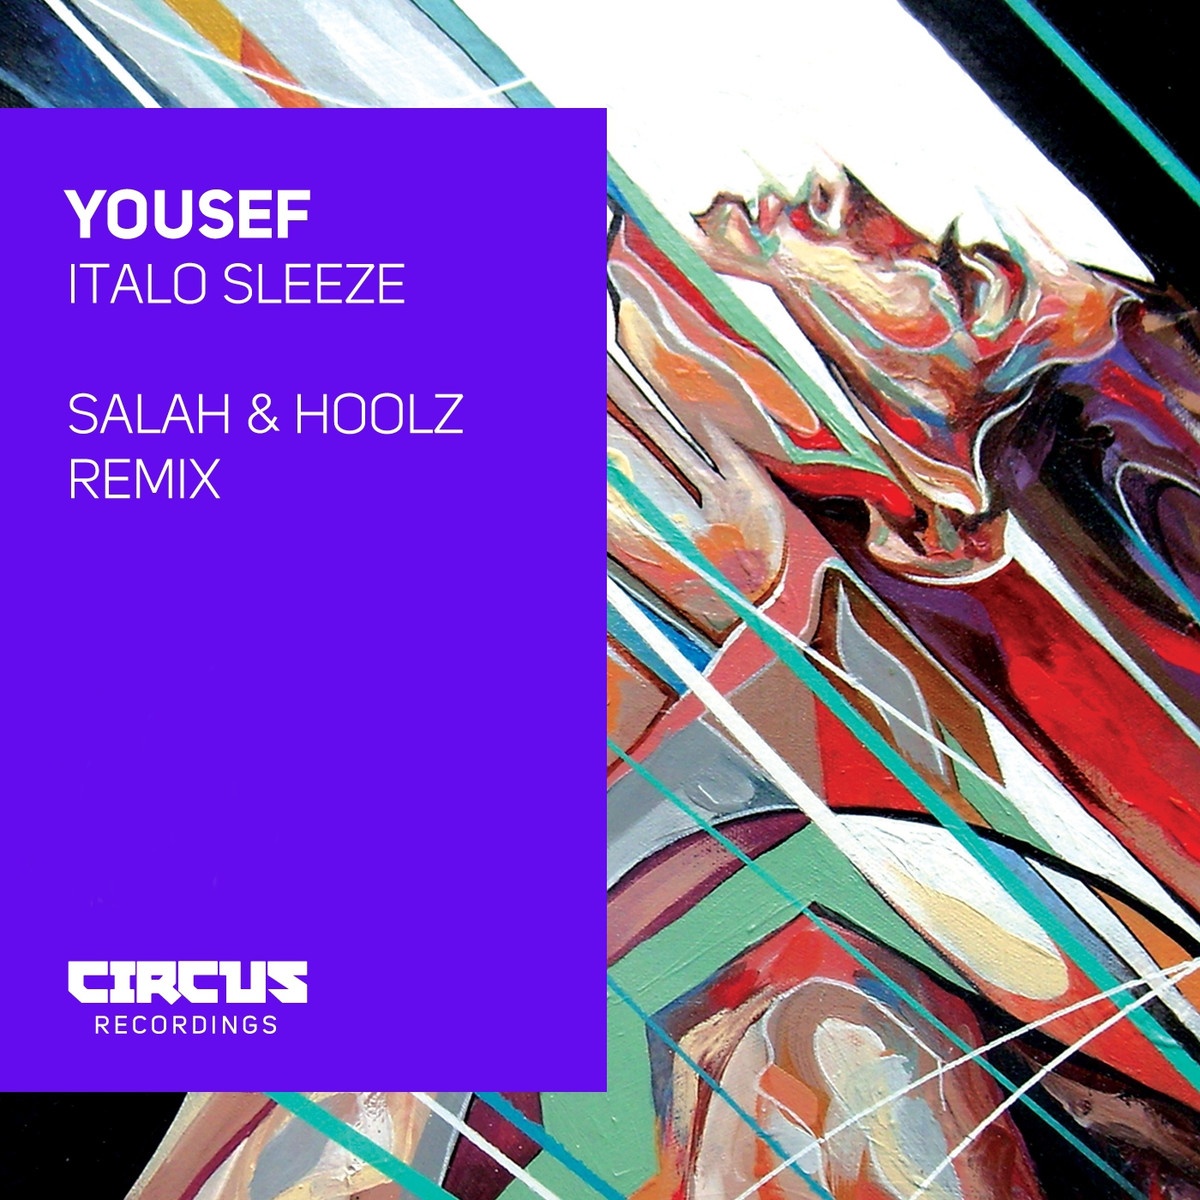 Italo Sleeze (Salah & Hoolz Remix)